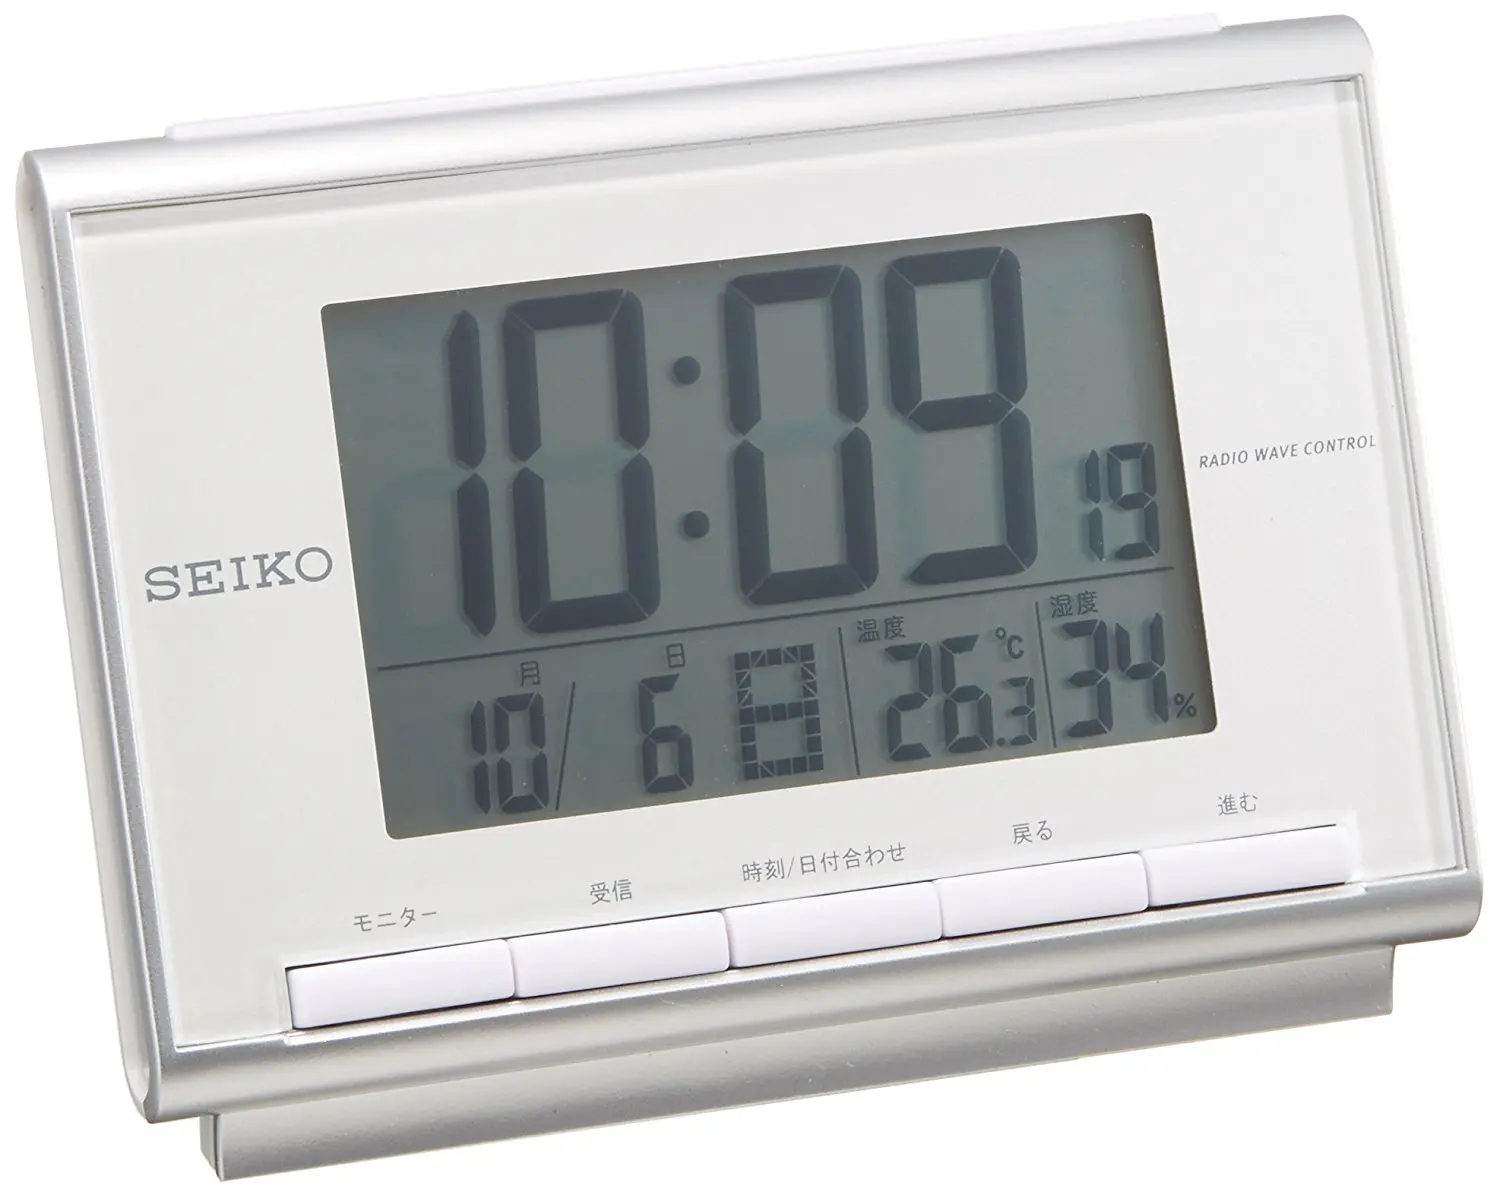 seiko lcd travel alarm clock instructions